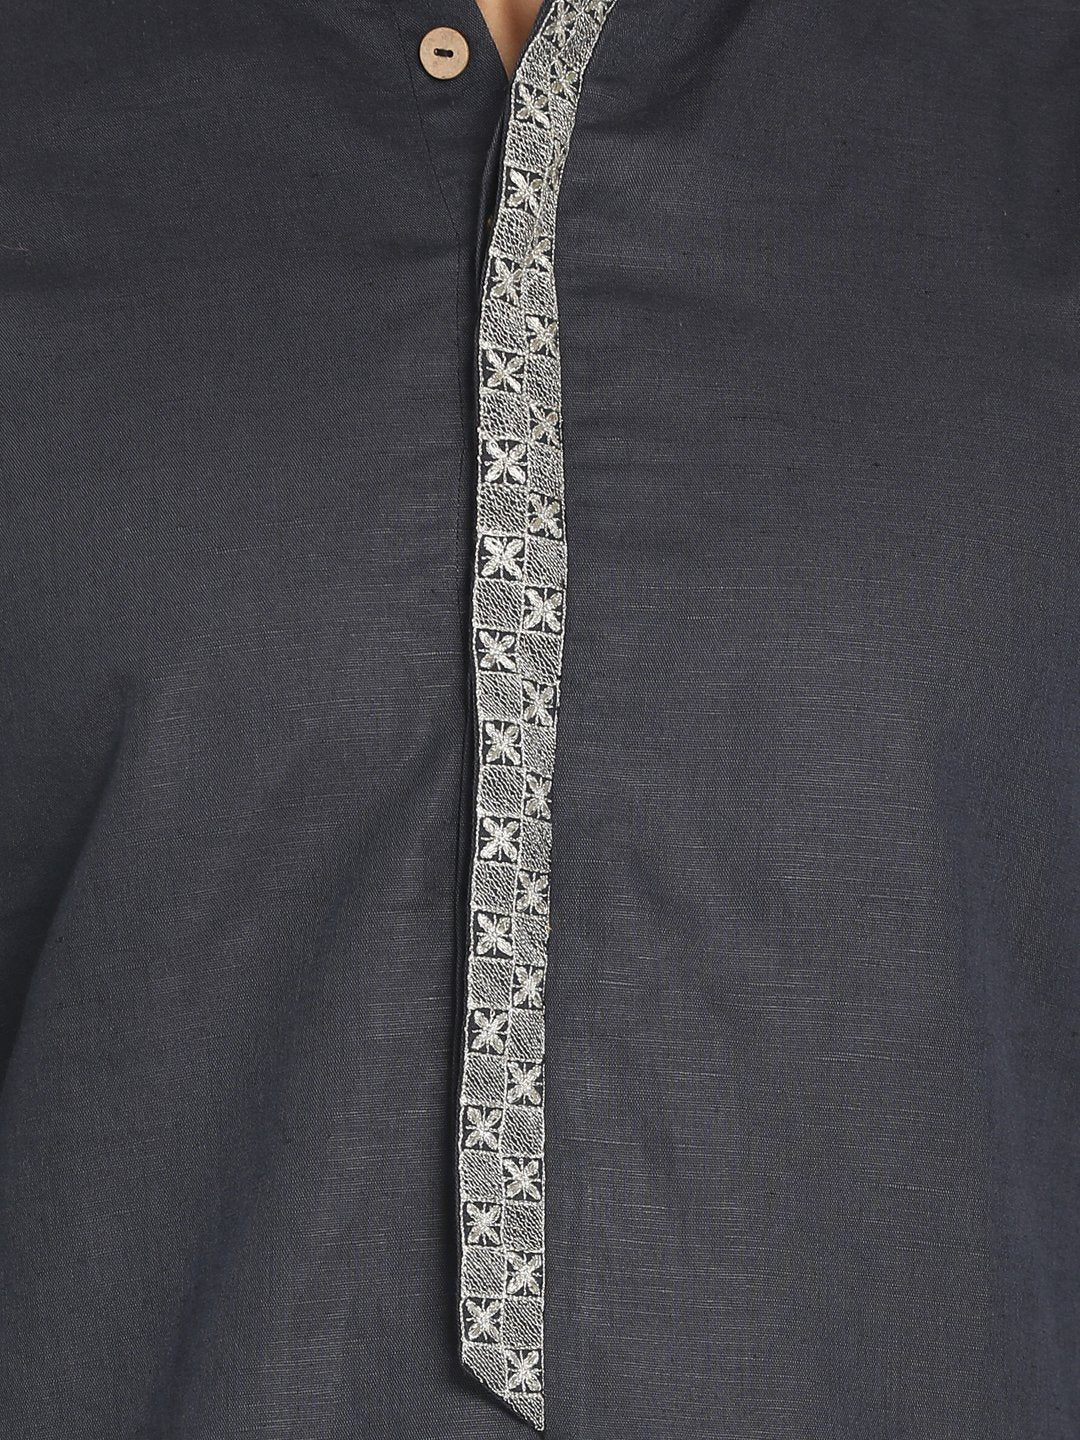 Nakshi Cotton Linen Grey Zari Embroidered Long Kurta with Mask